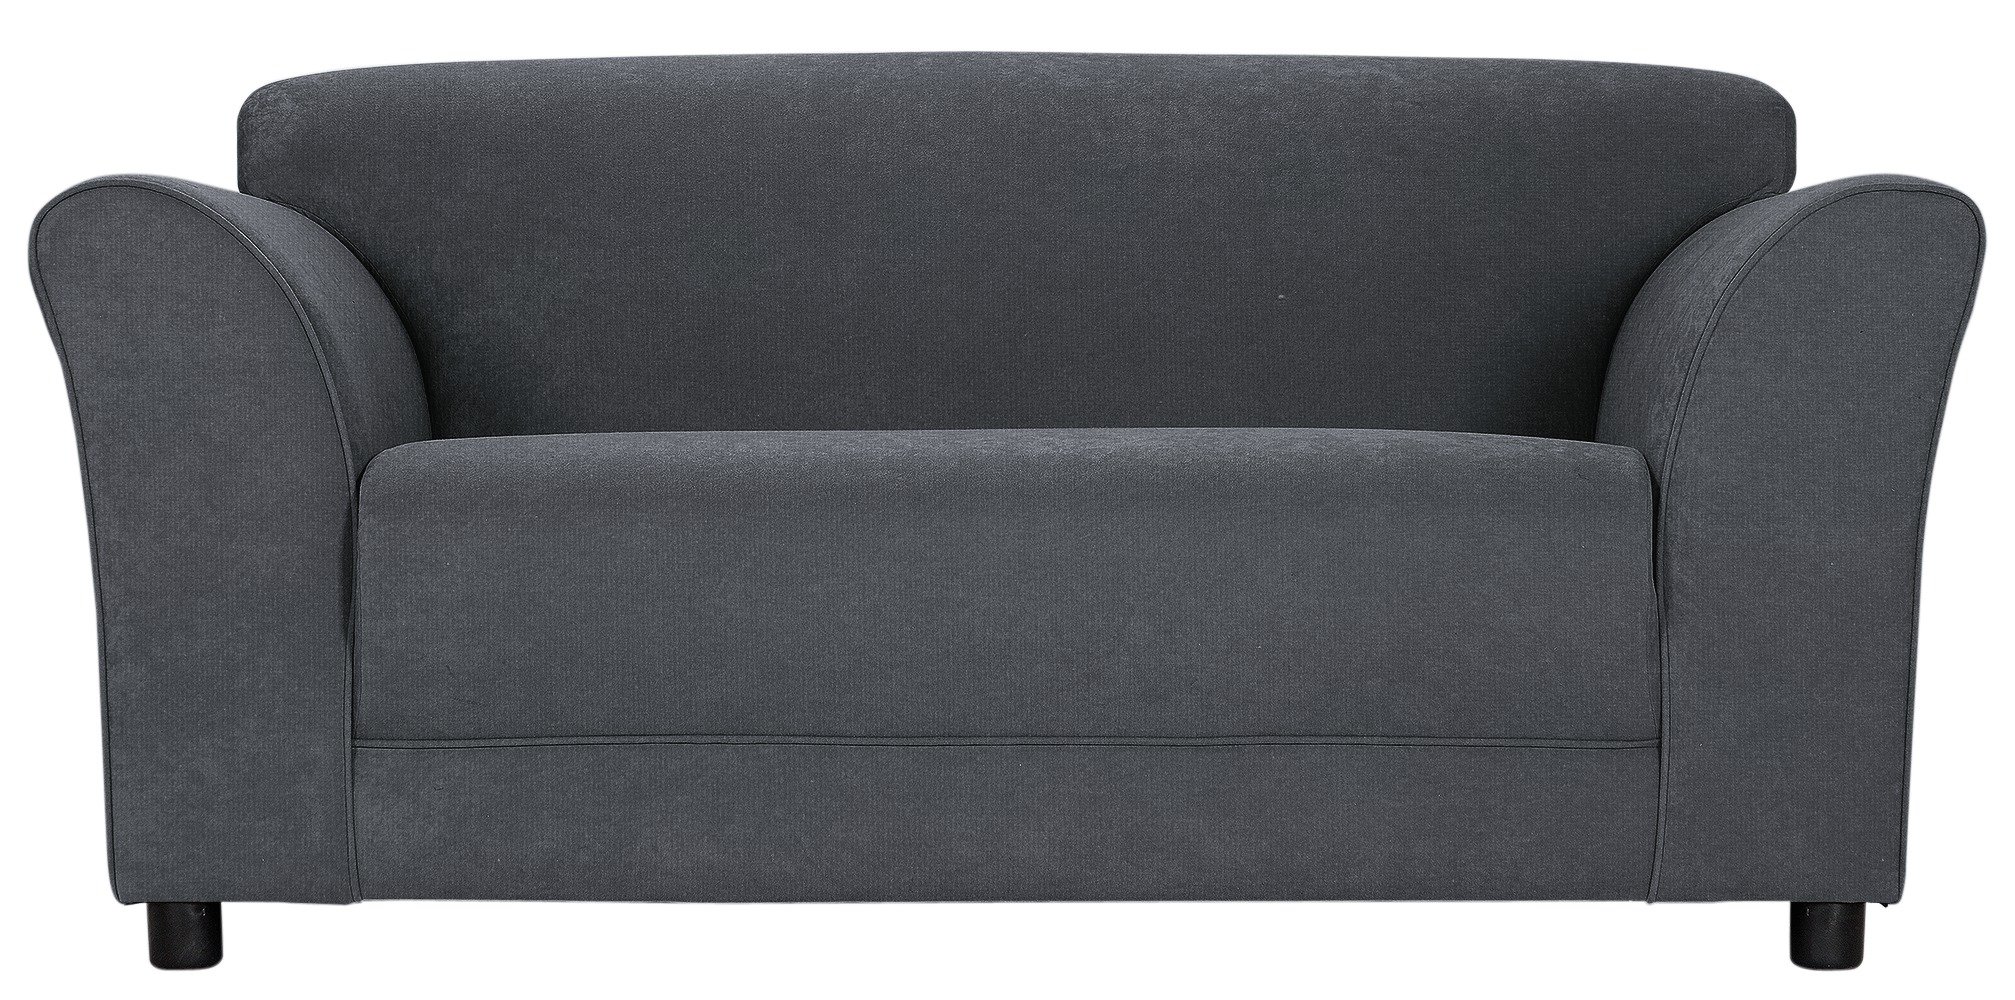 Argos Home Jenna Compact 2 Seater Fabric Sofa - Charcoal